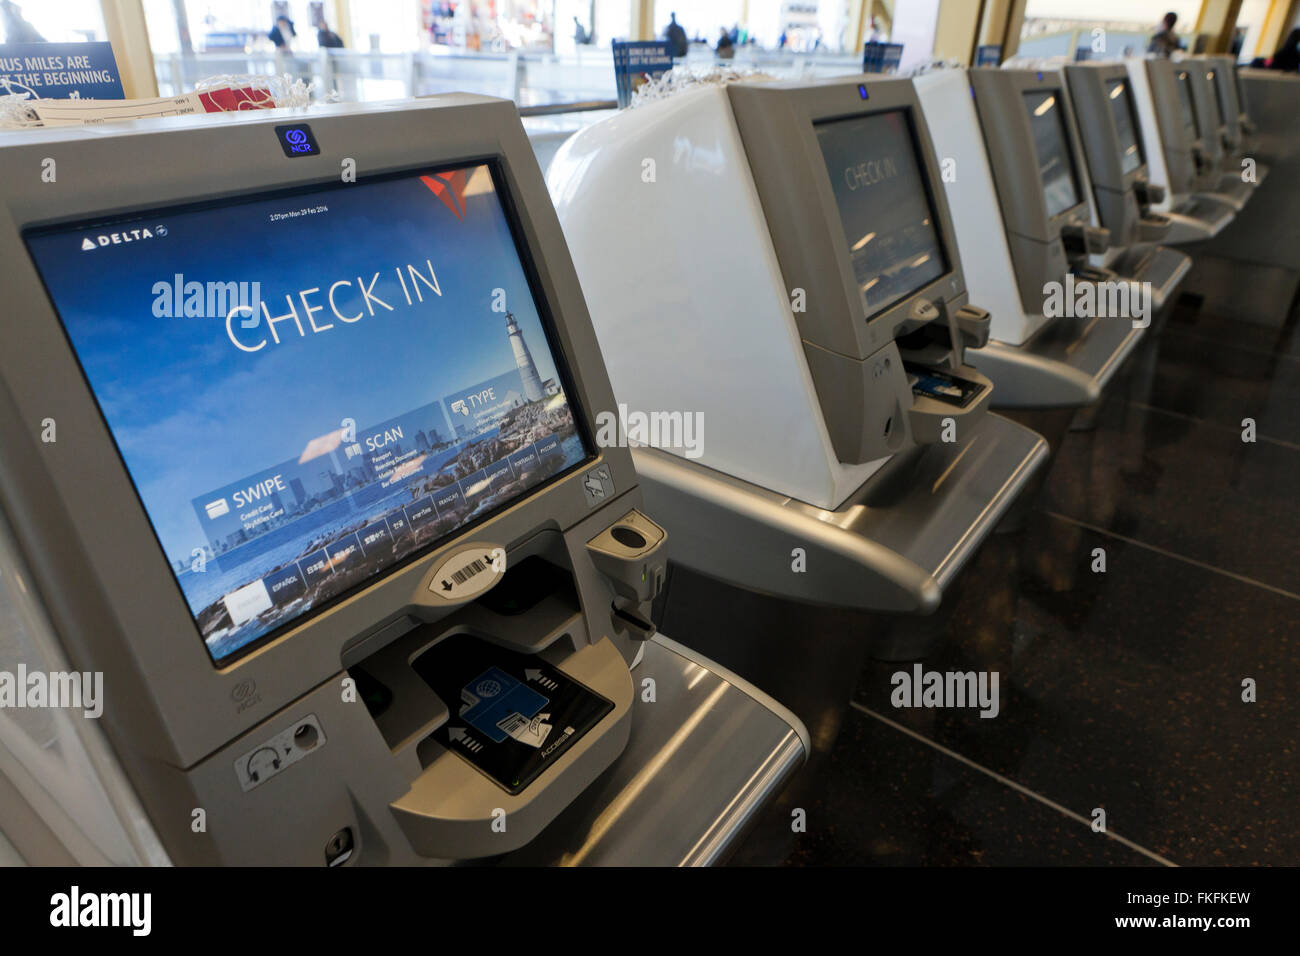 Delta Airlines airport check-in kiosks - Ronald Reagan Washington National Airport, USA Stock Photo